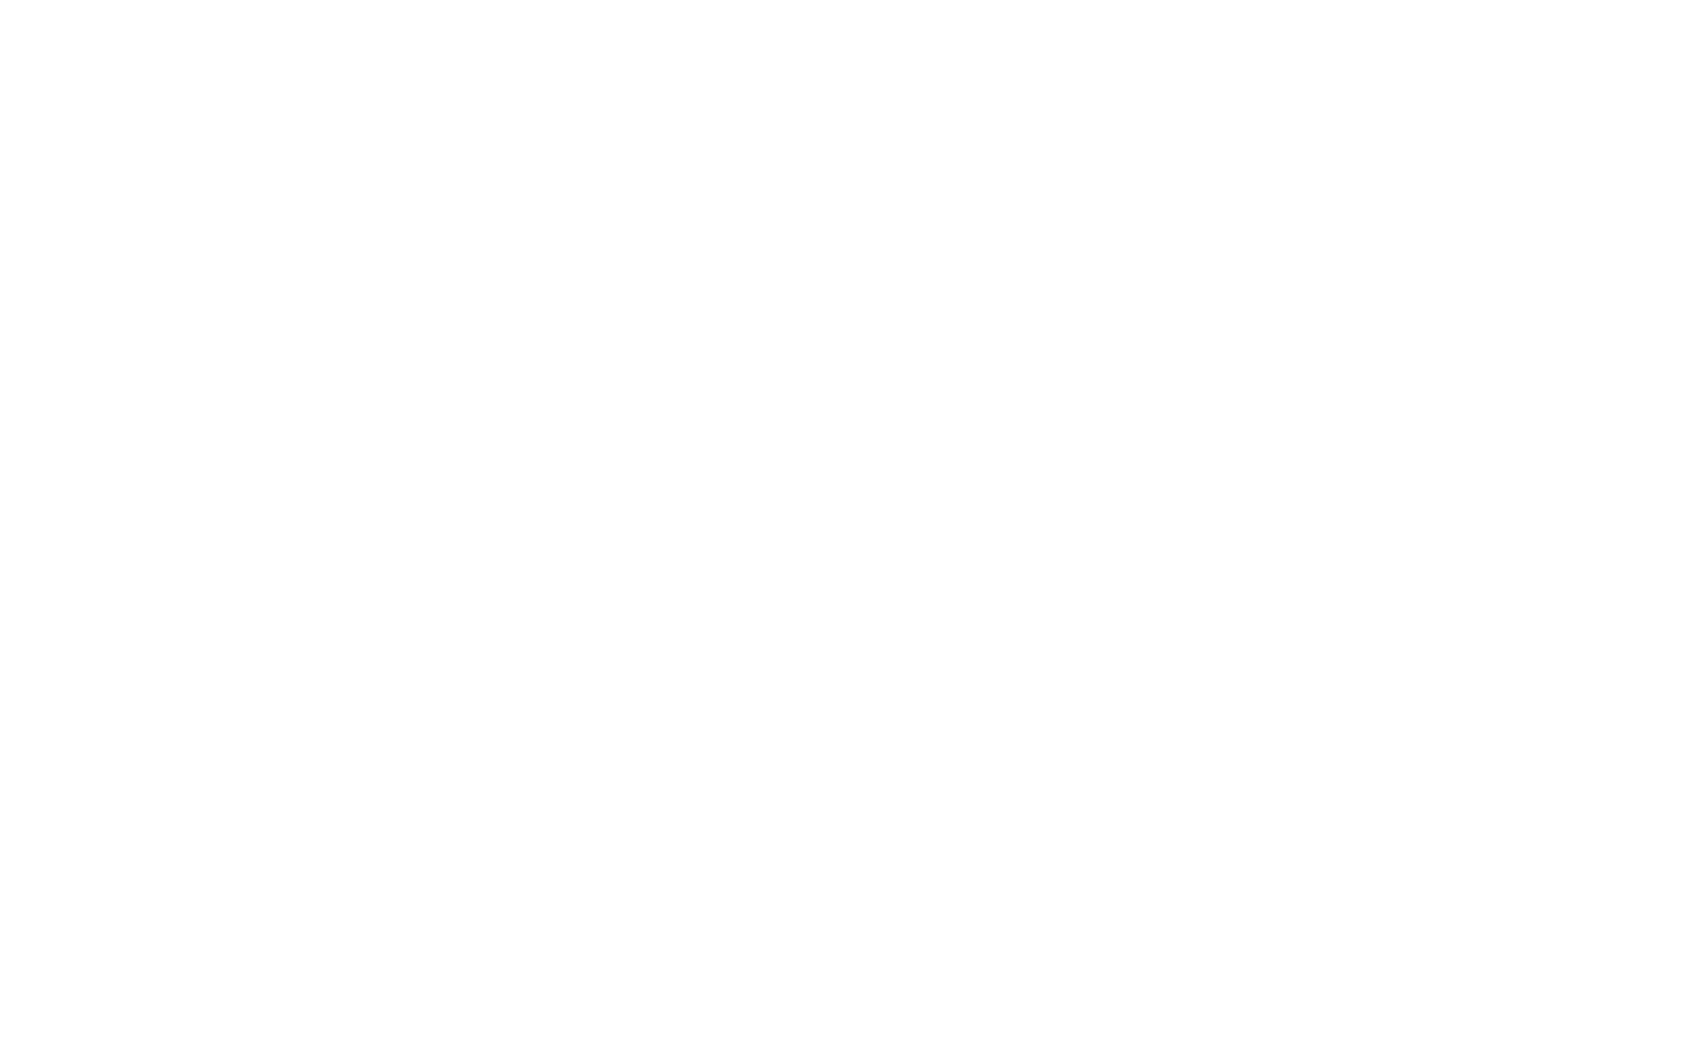 Giraffe logo in white